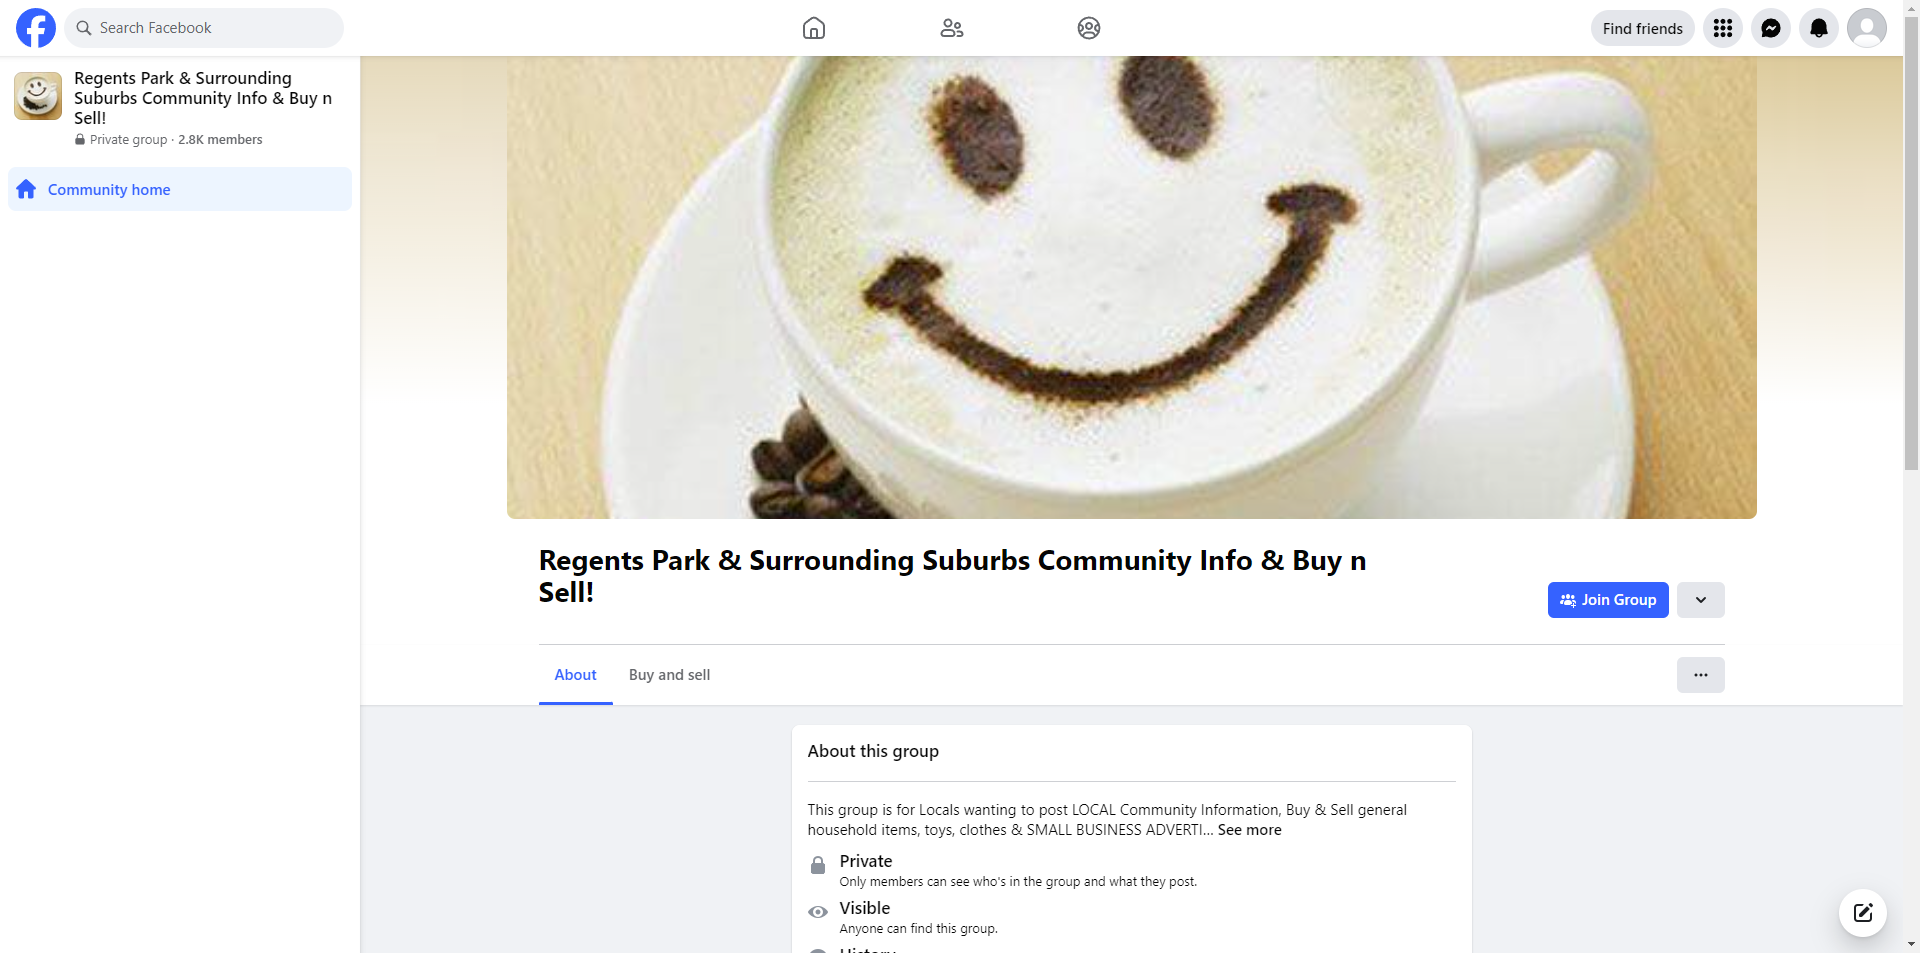 Regents Park & Surrounding Suburbs Community Info & Buy N Sell!